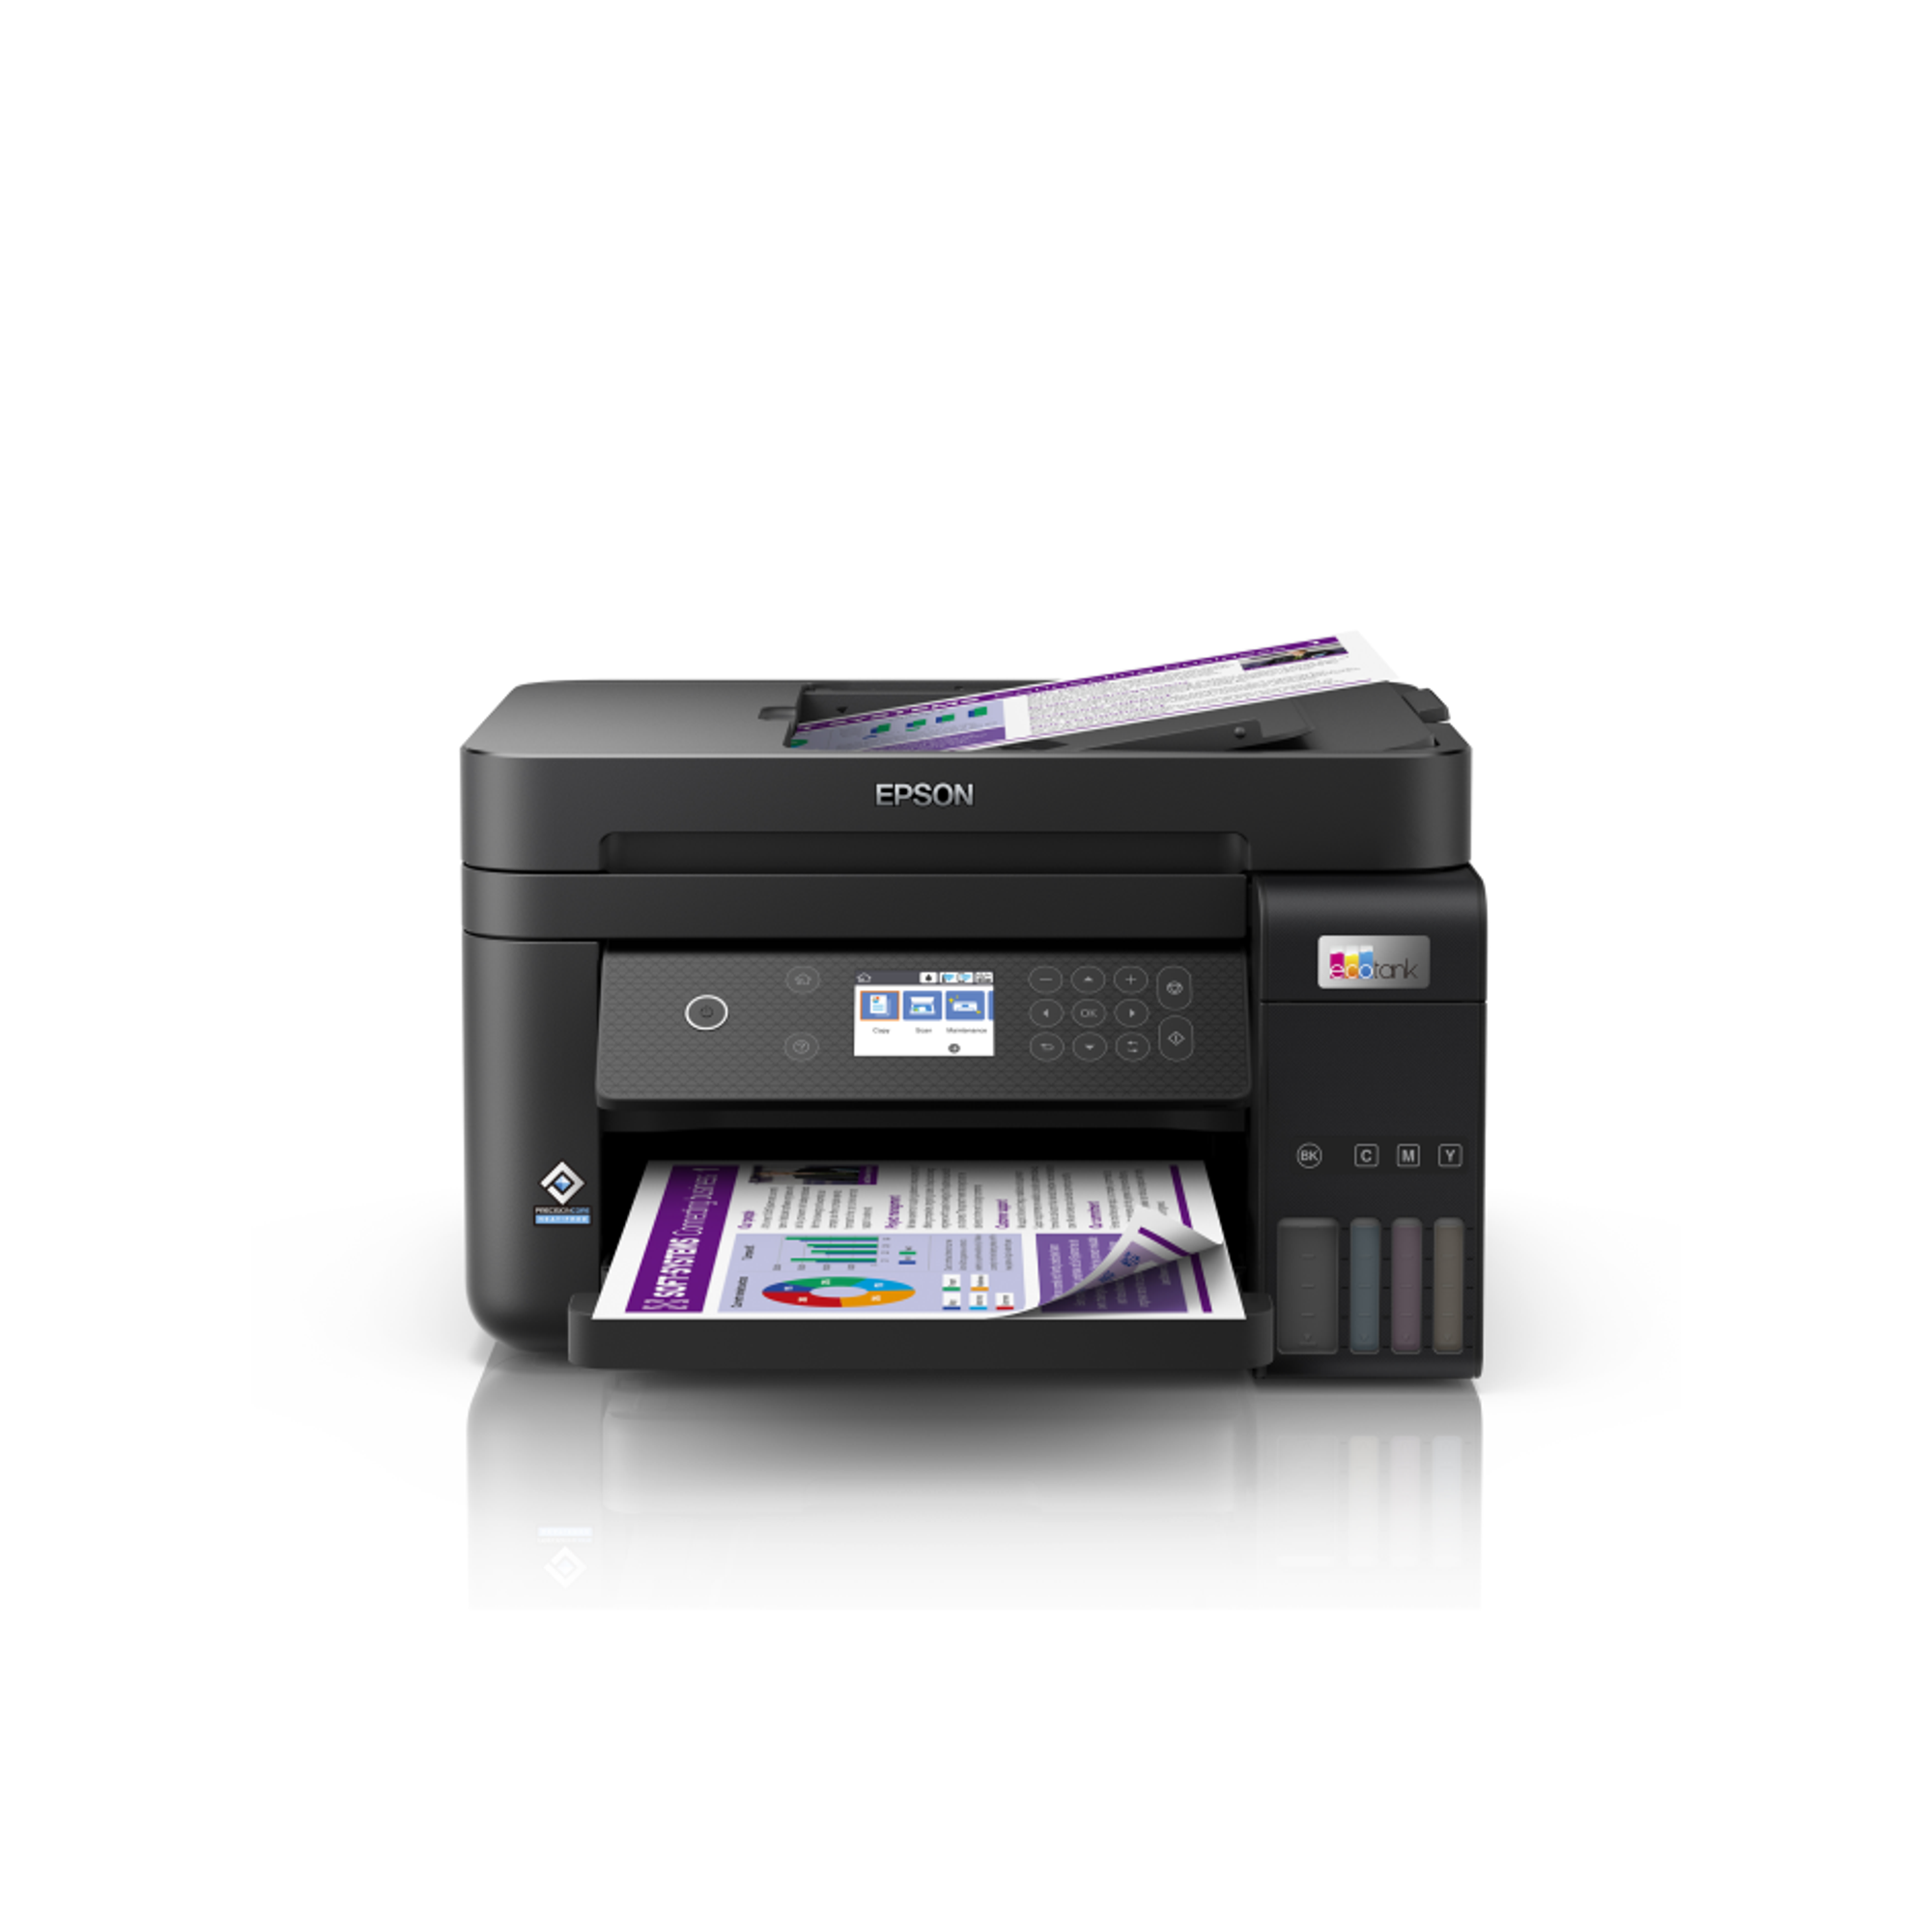 Epson Office ink tank printer